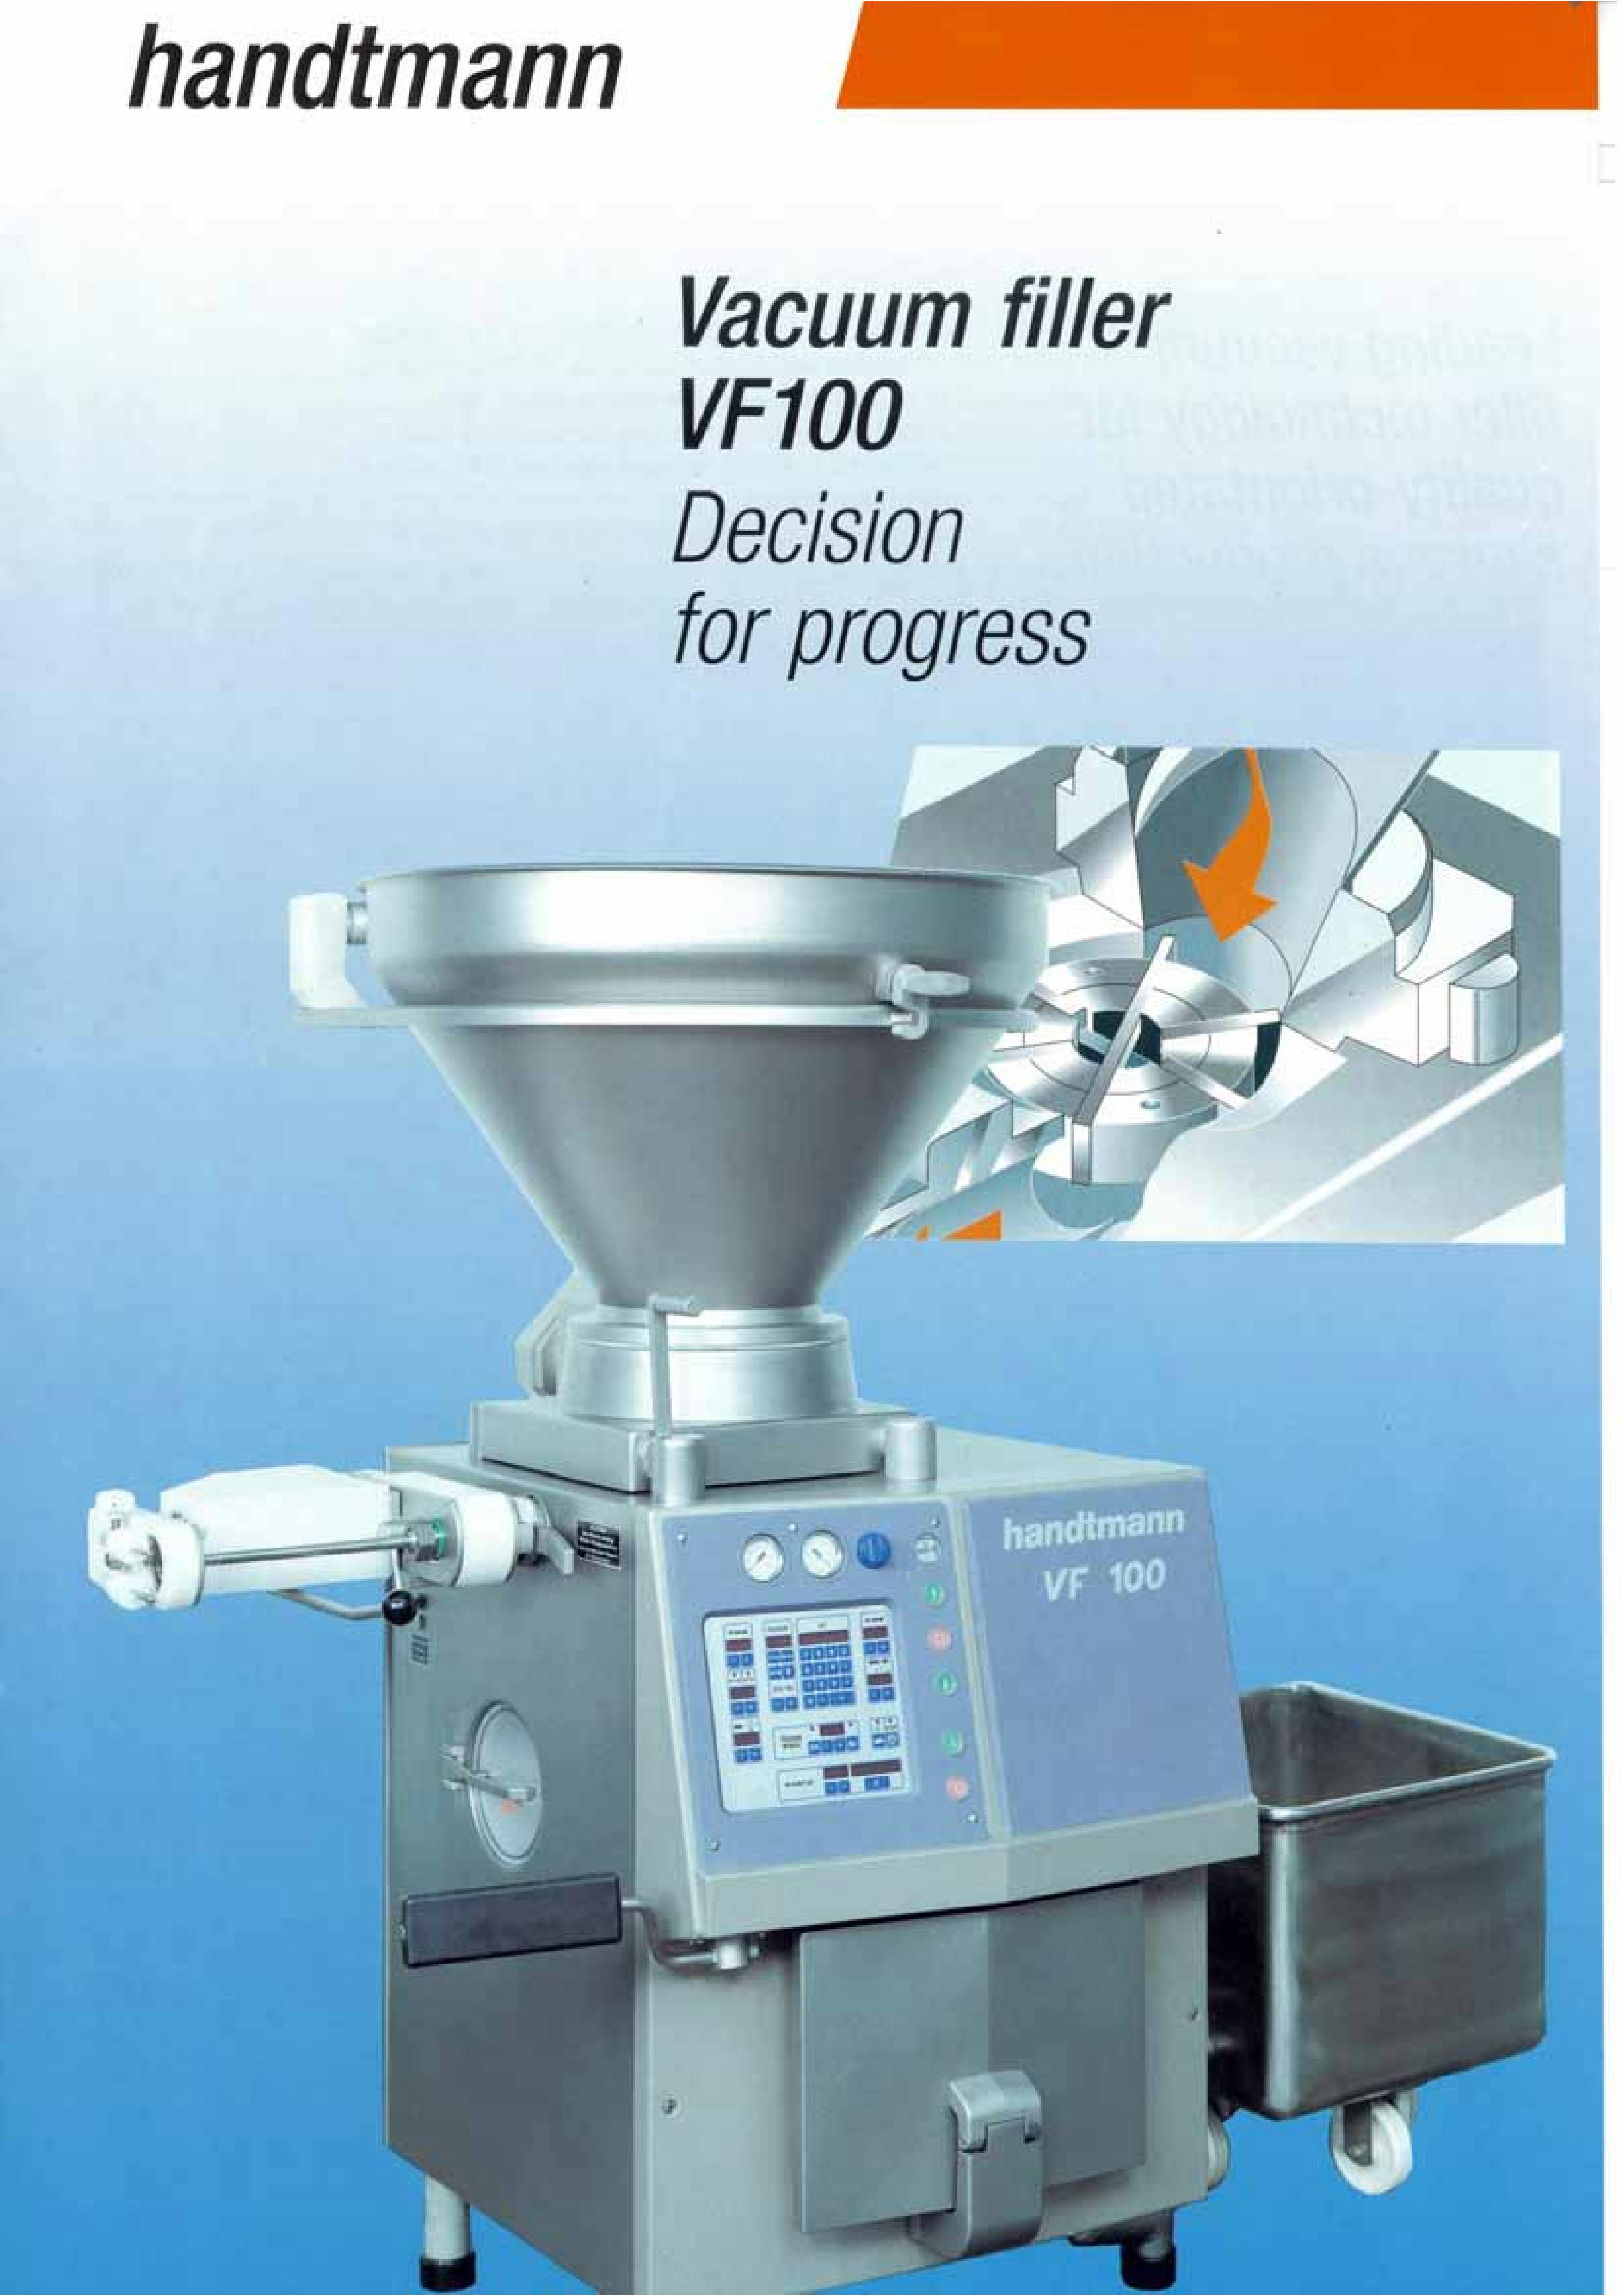 Handtmann VF100 vacuum filler - Llenadora de pistón - image 8